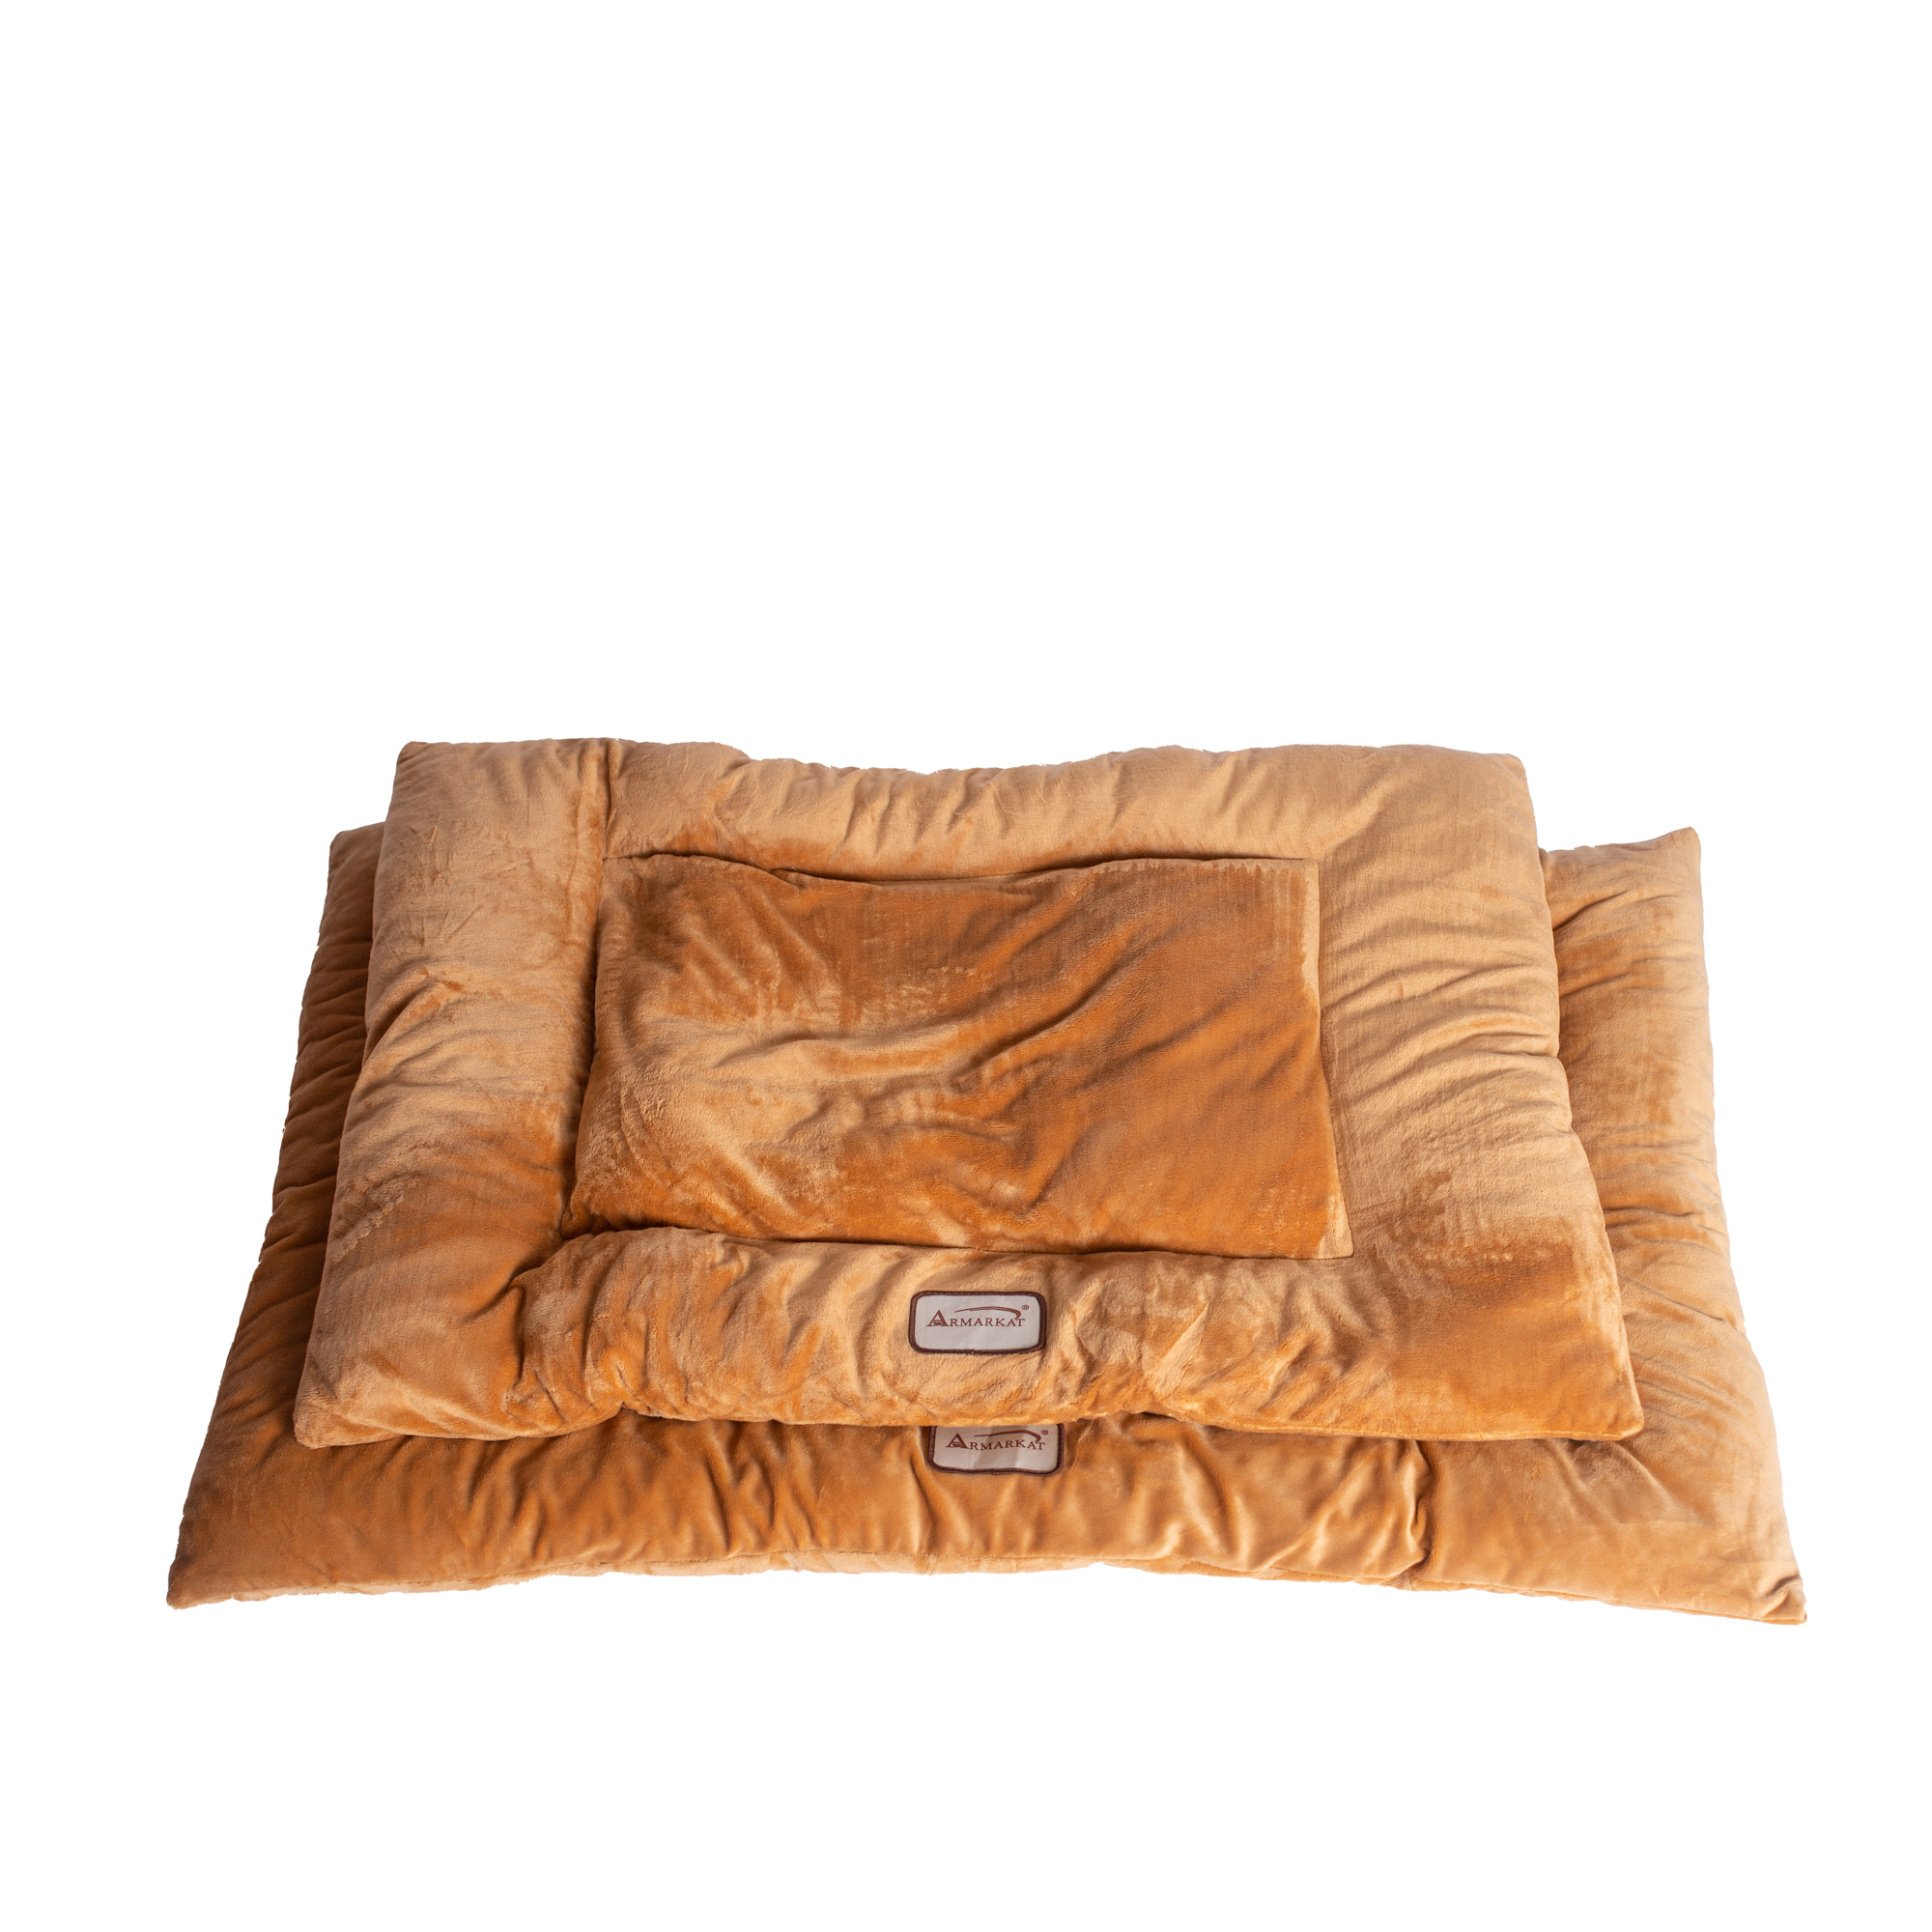 M01czs-l Armarkat Pet Bed Mat-brown 35 X 22 X 3